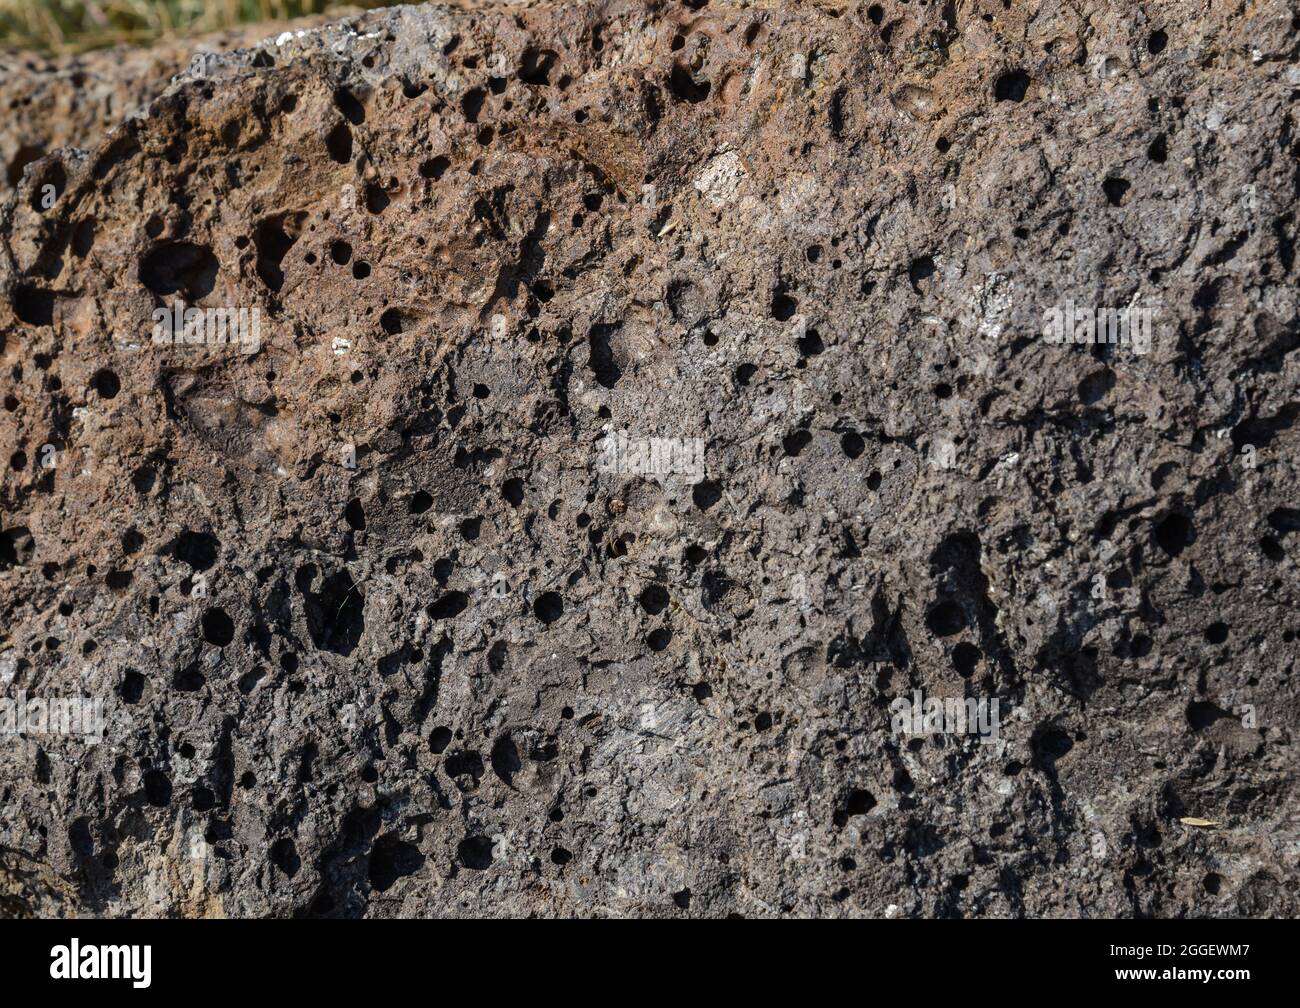 Porphyritic volcanic rock with feldspar crystals and many vesicles. Burns, Oregon, USA. Stock Photo